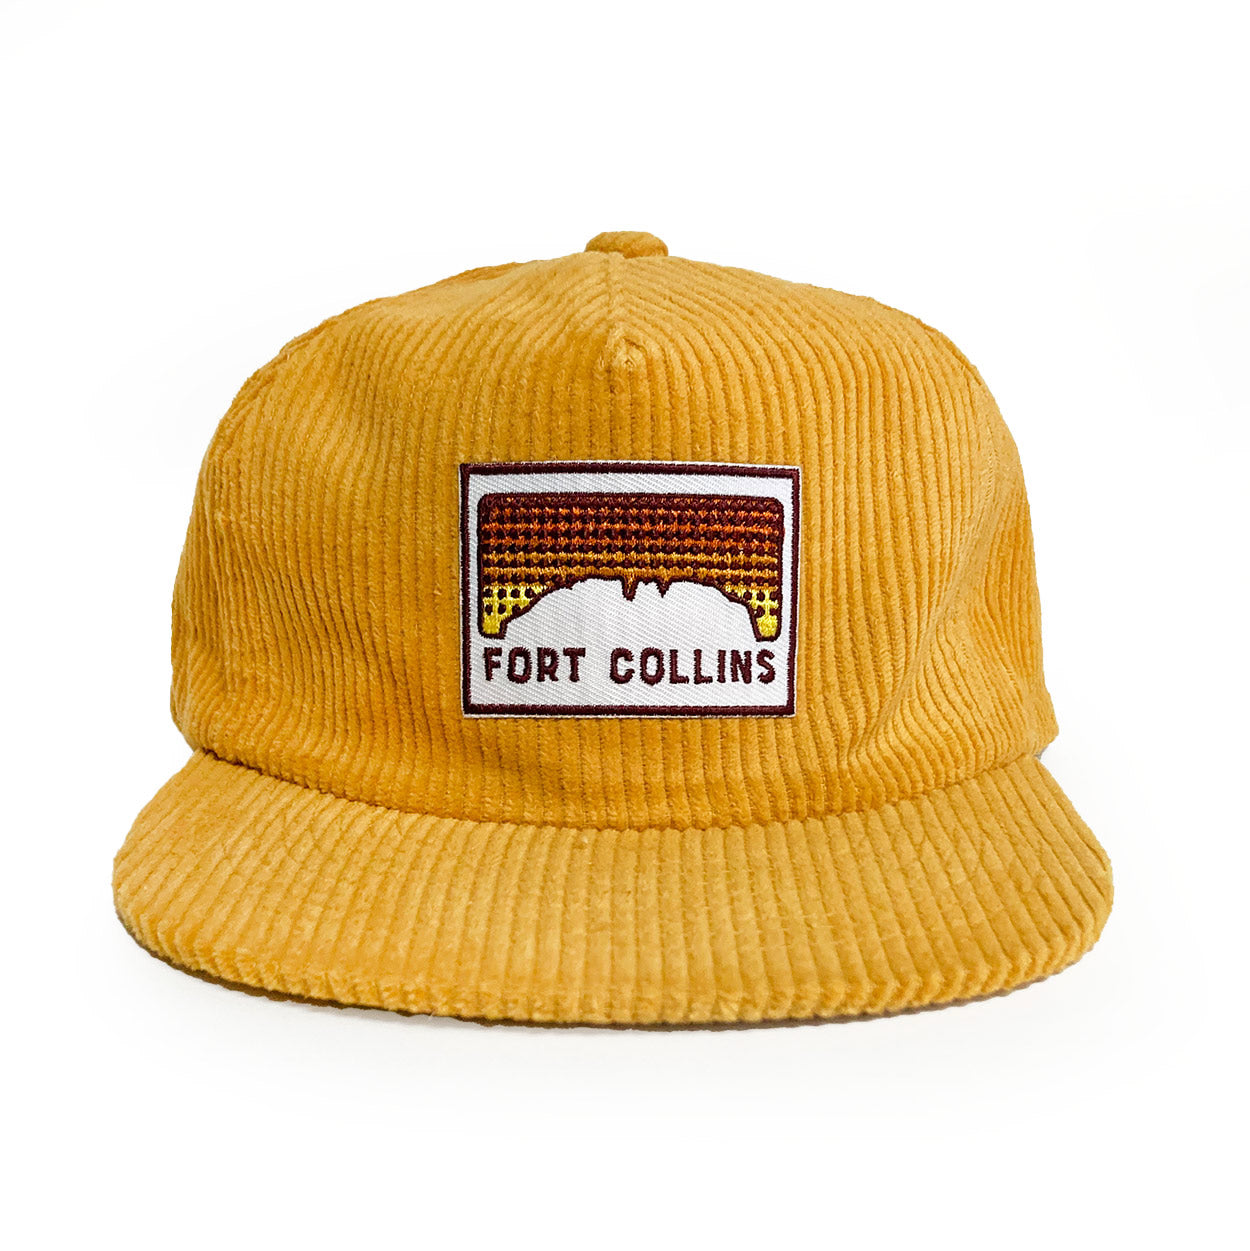 Fort Collins Sunset Corduroy Hat